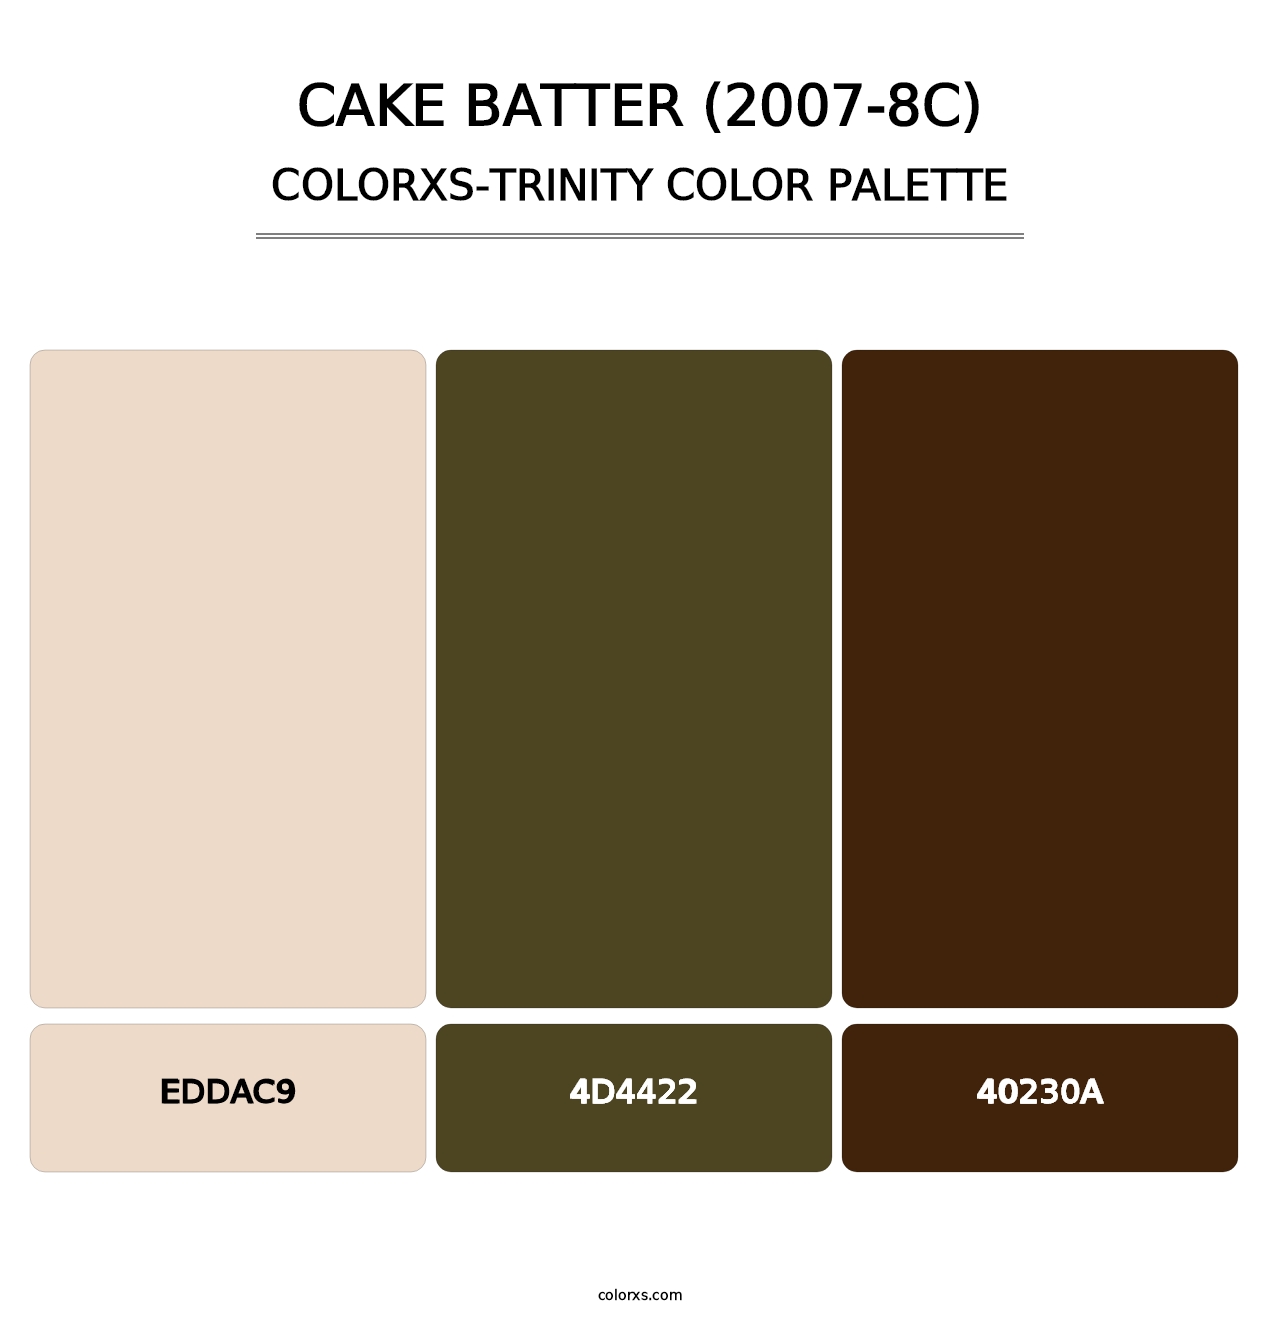 Cake Batter (2007-8C) - Colorxs Trinity Palette